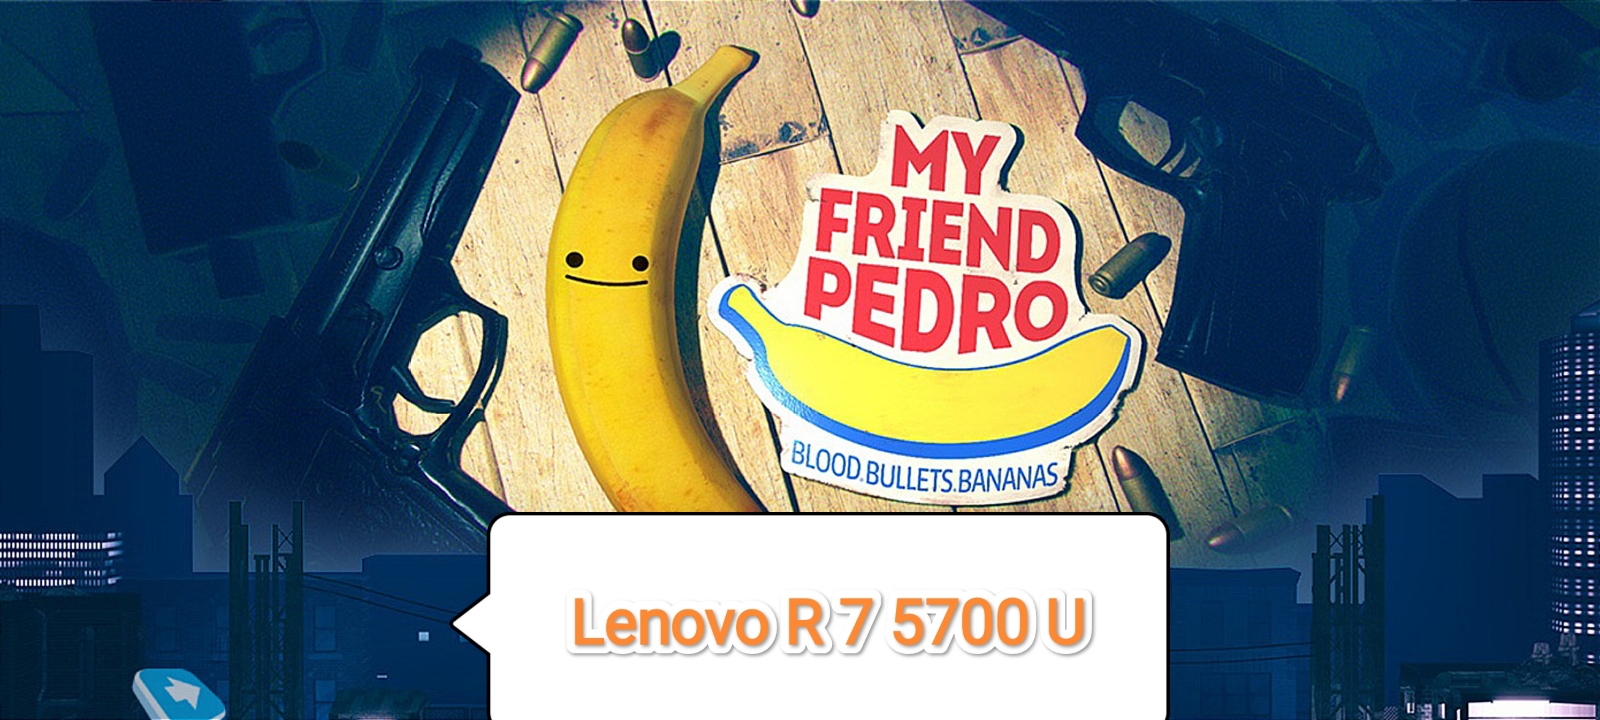 My Friend Pedro vs Lenovo R 7 5700 U